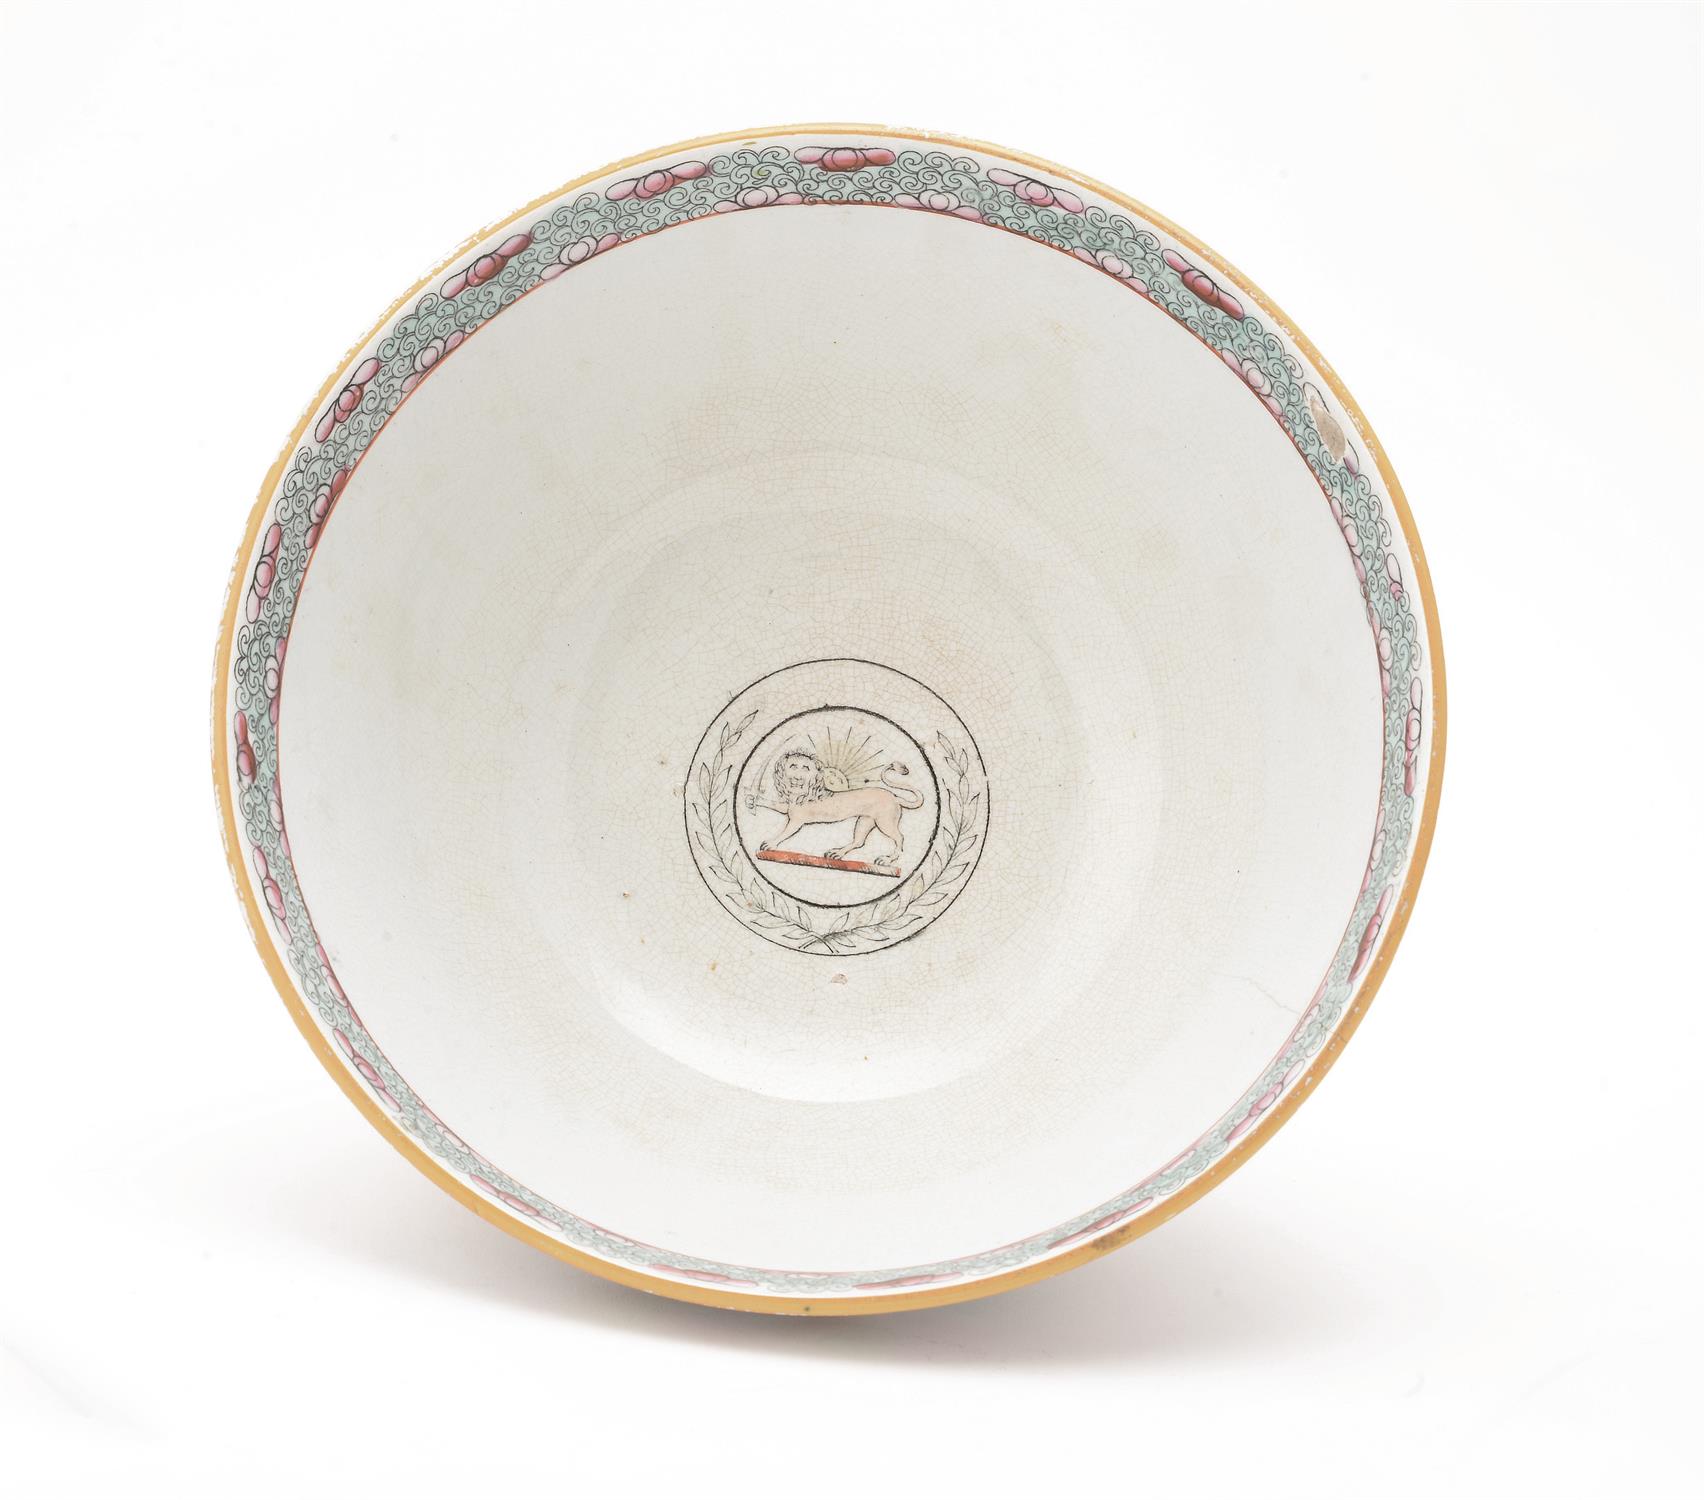 A Staffordshire pottery bowl with Shir-o Khorshid emblem - Image 2 of 3